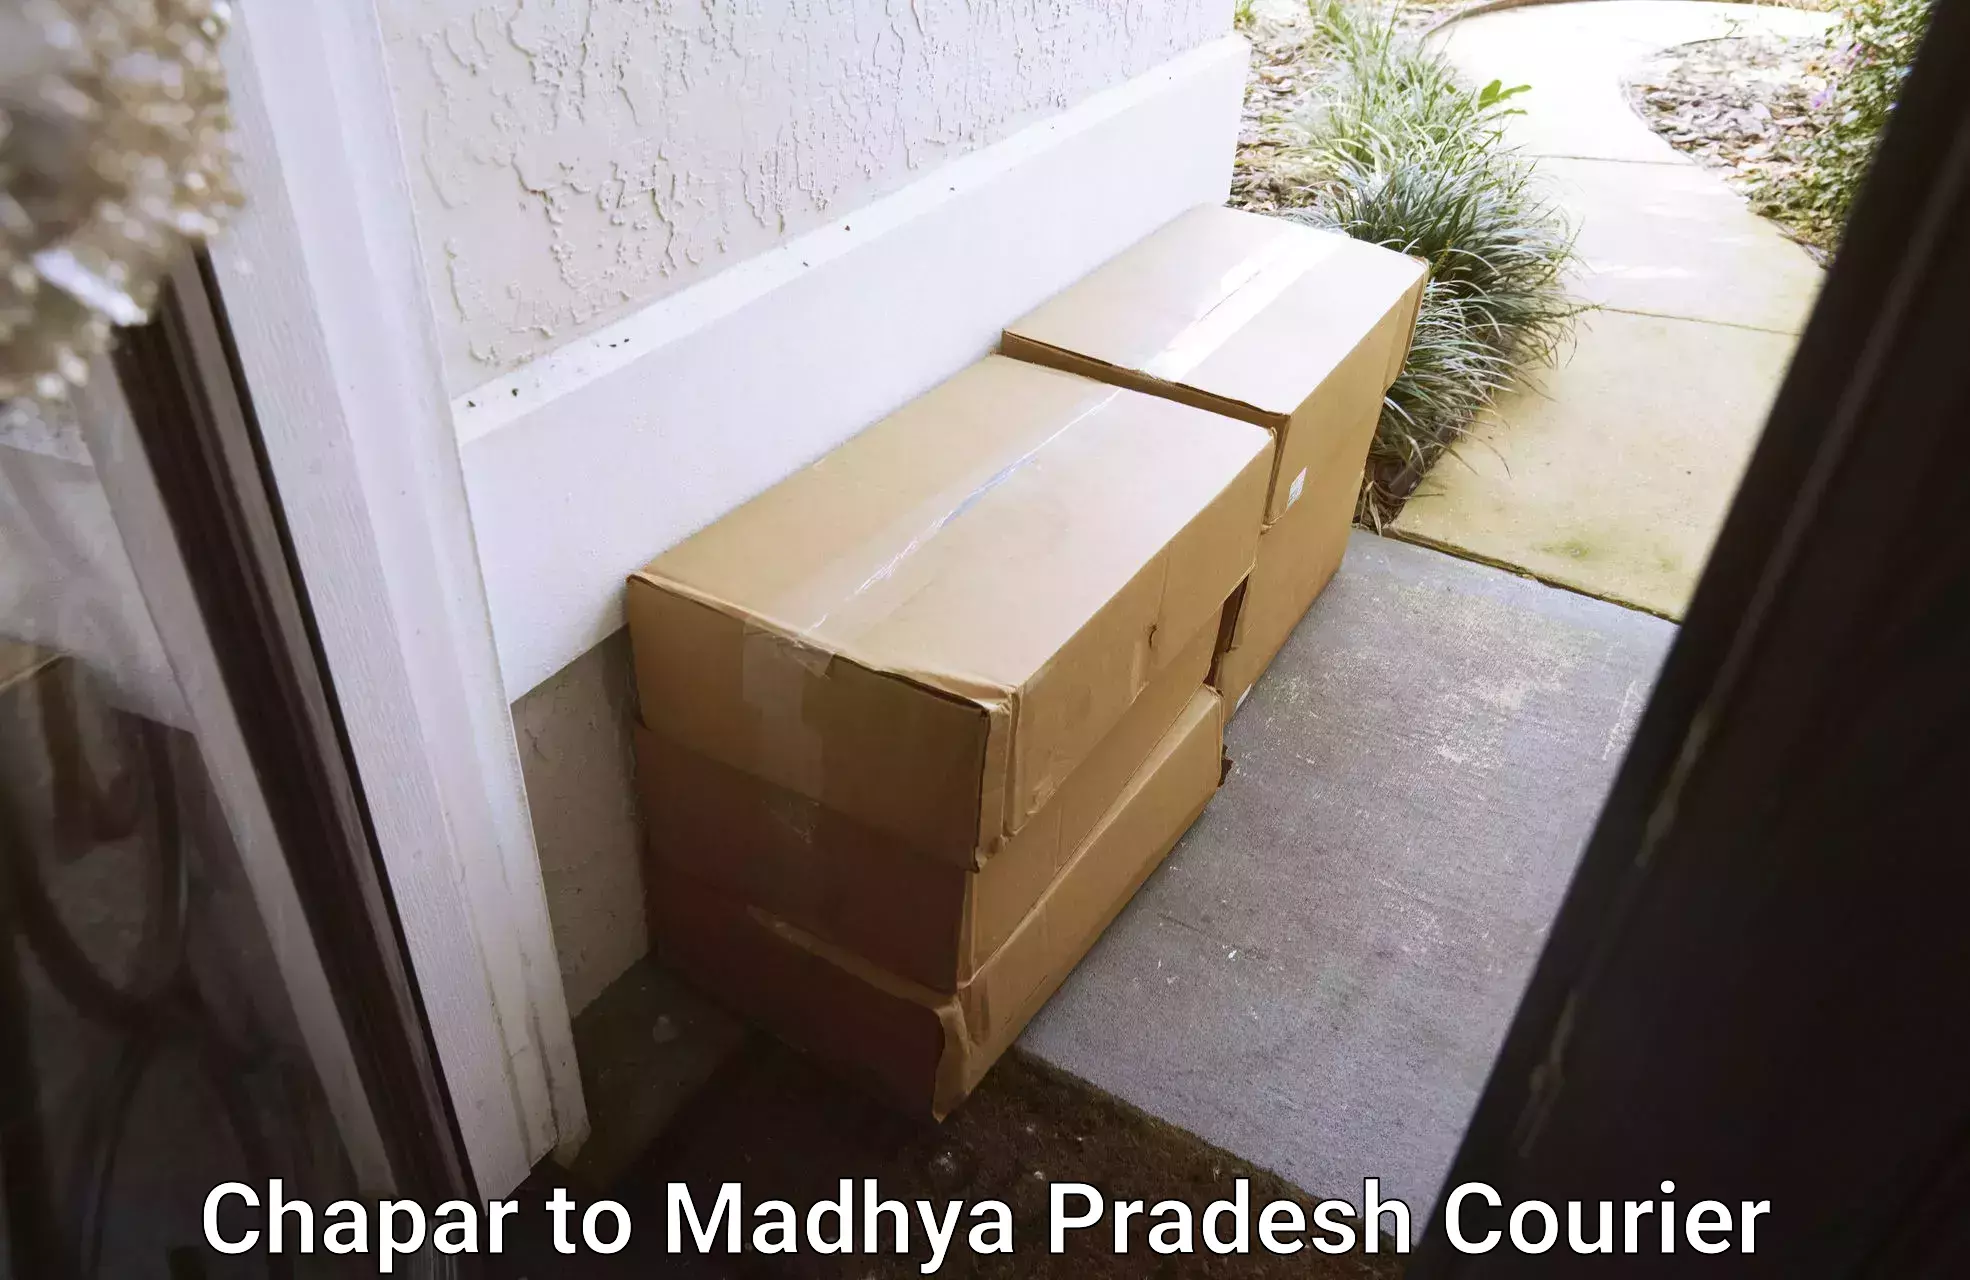 Custom courier packaging Chapar to Nainpur